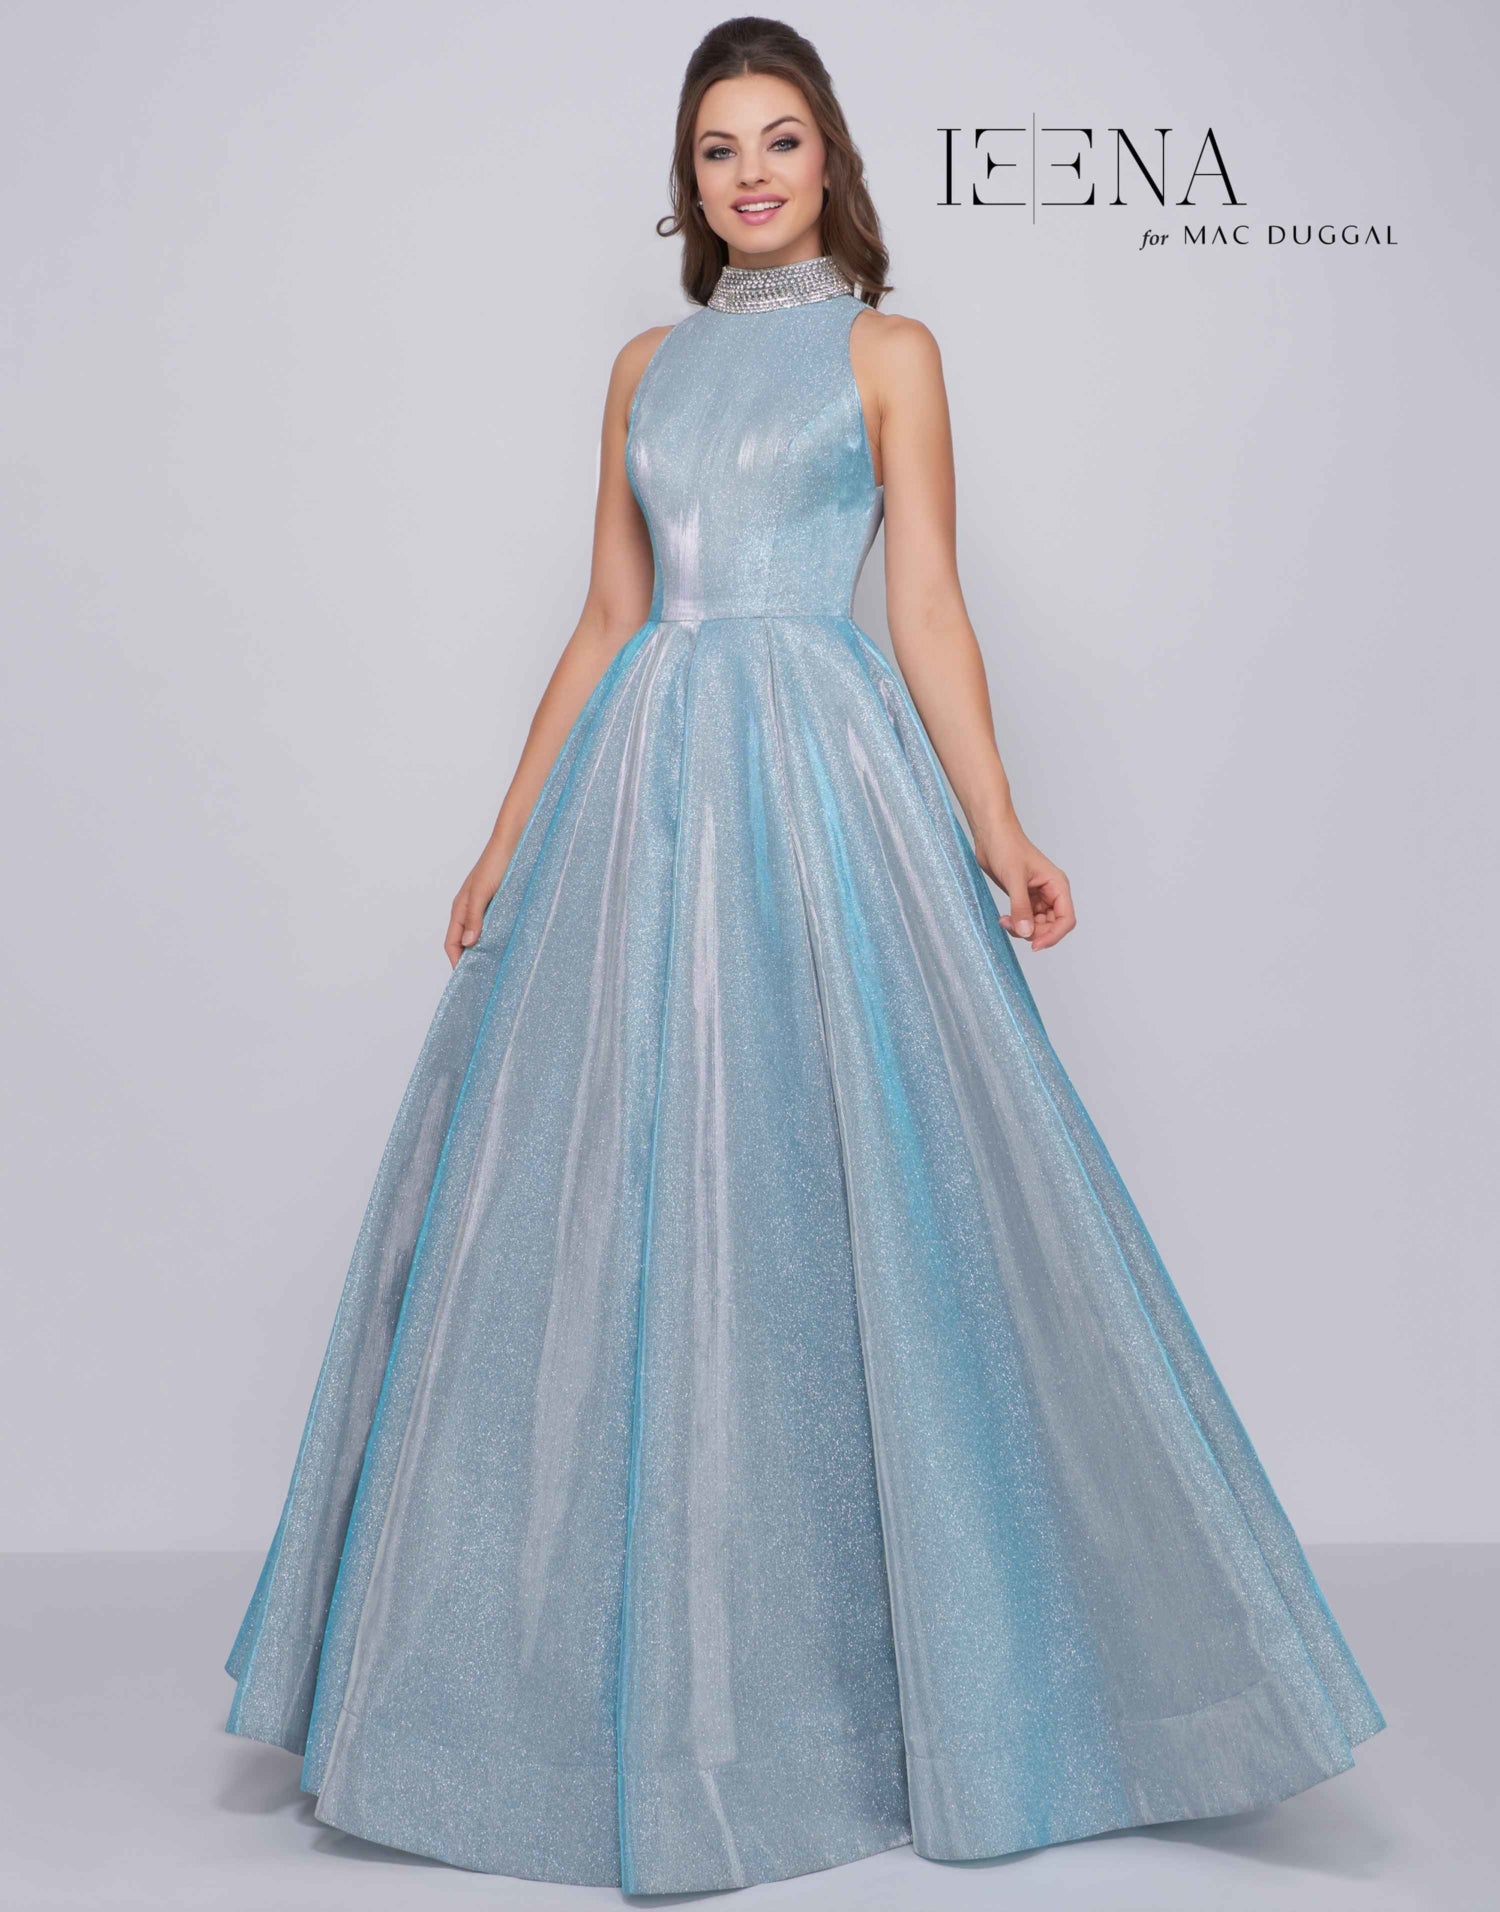 IEENA, PROM DRESSES STYLE  25957I Dress